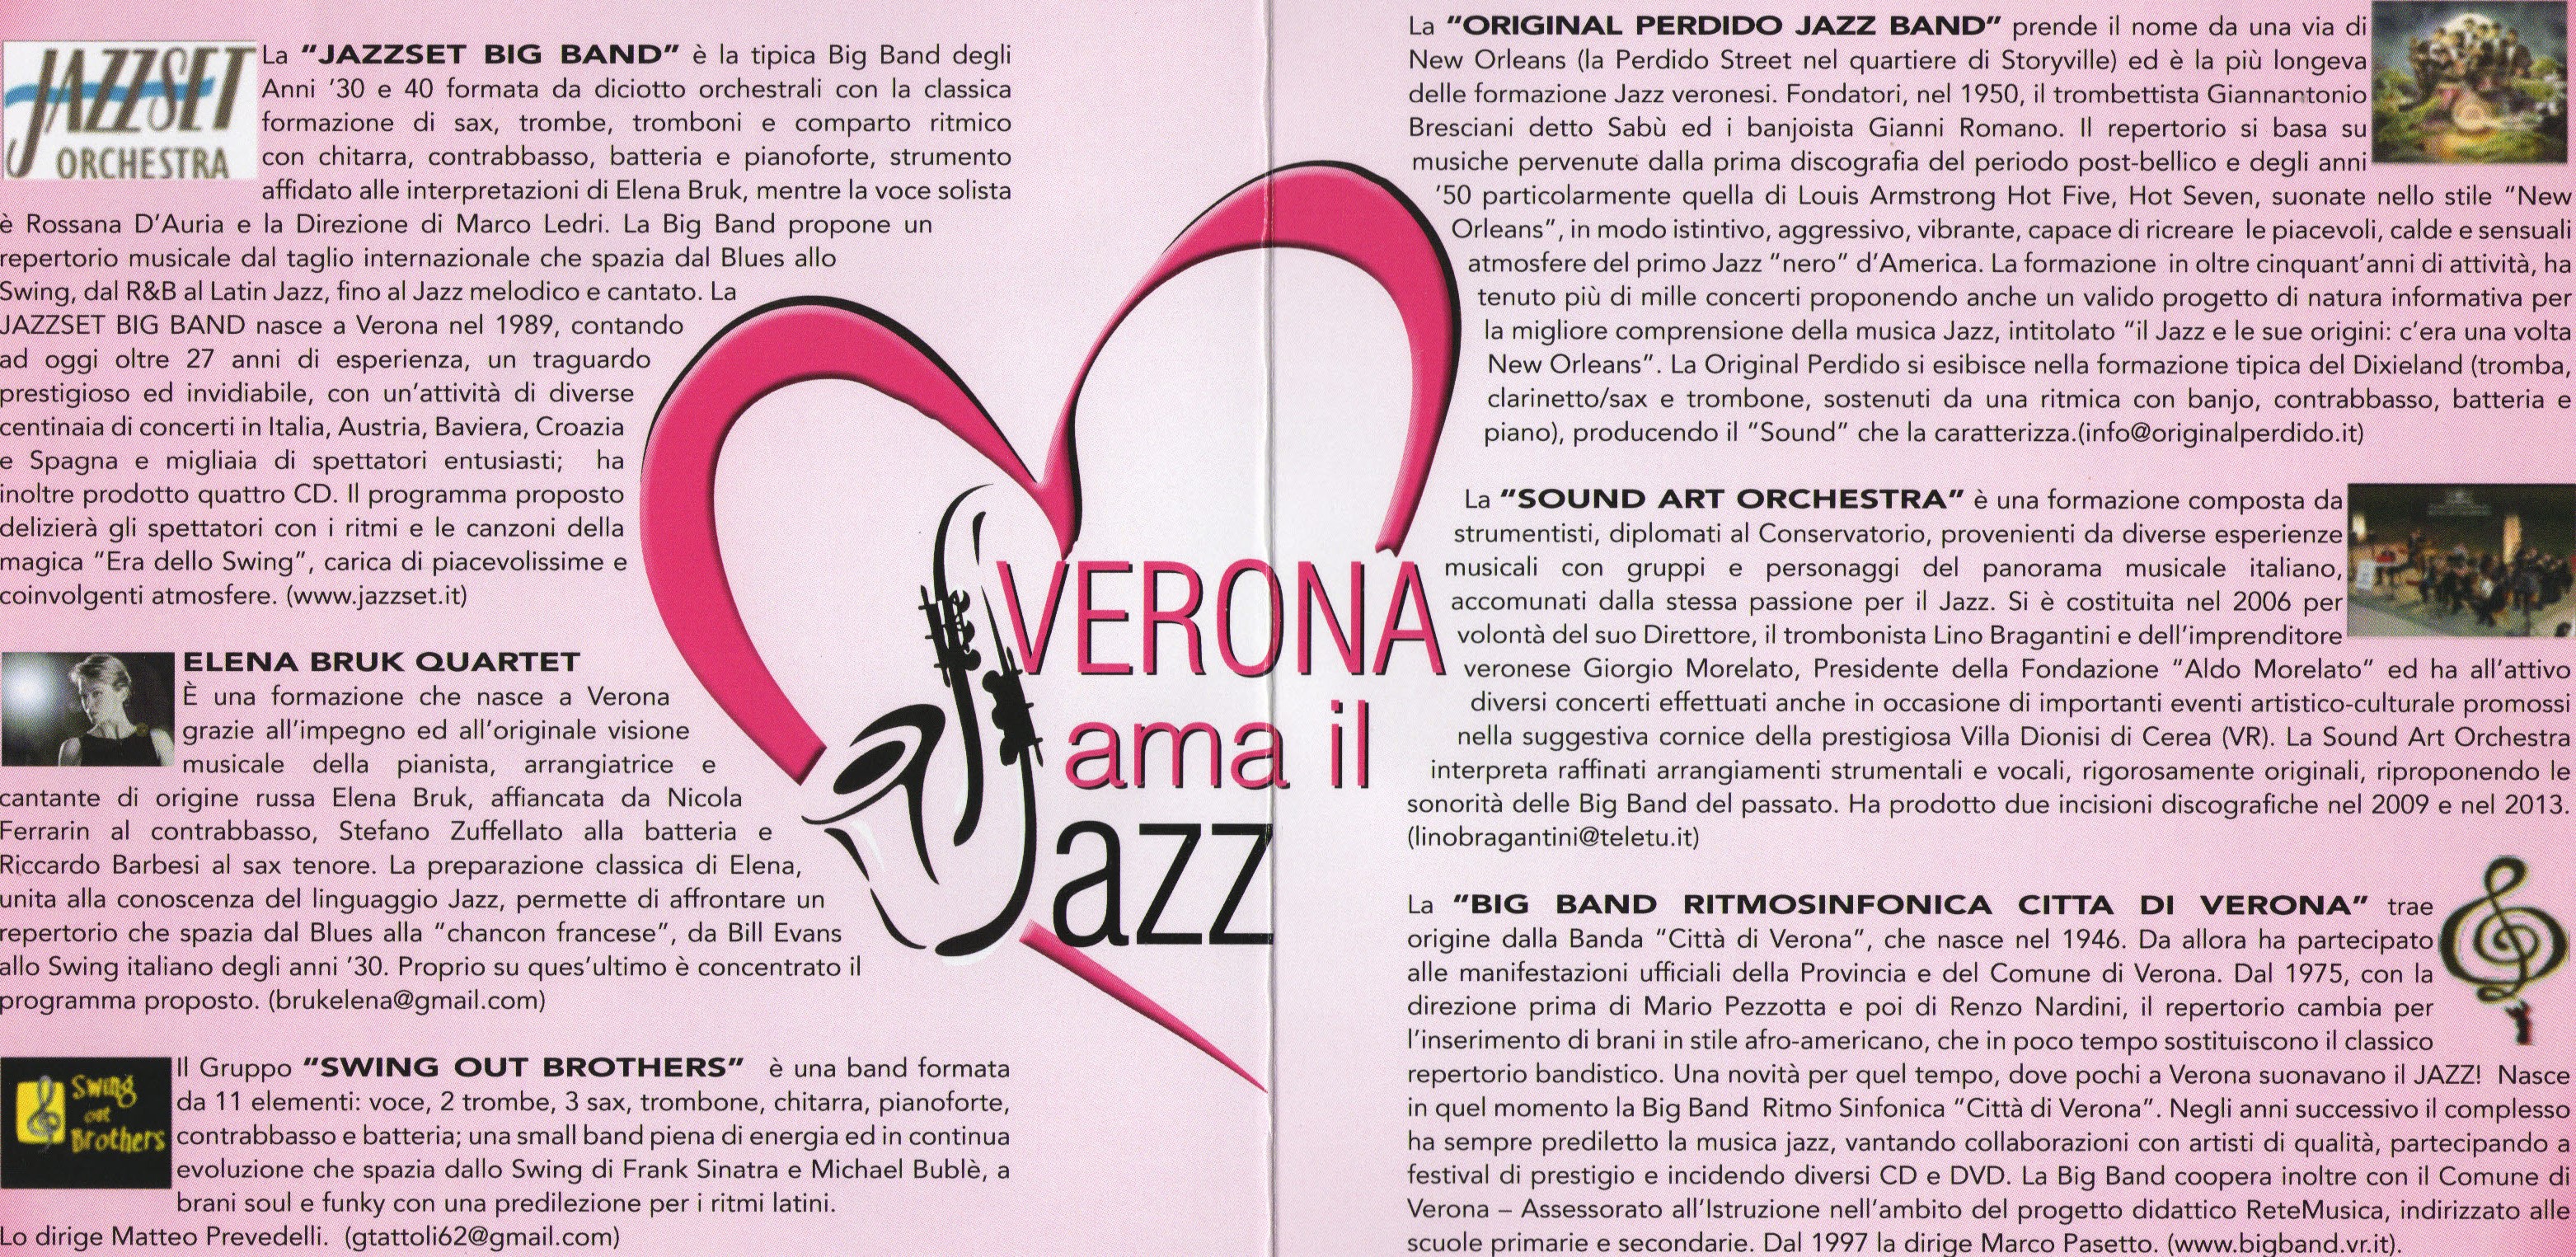 Verona ama il jazz 2